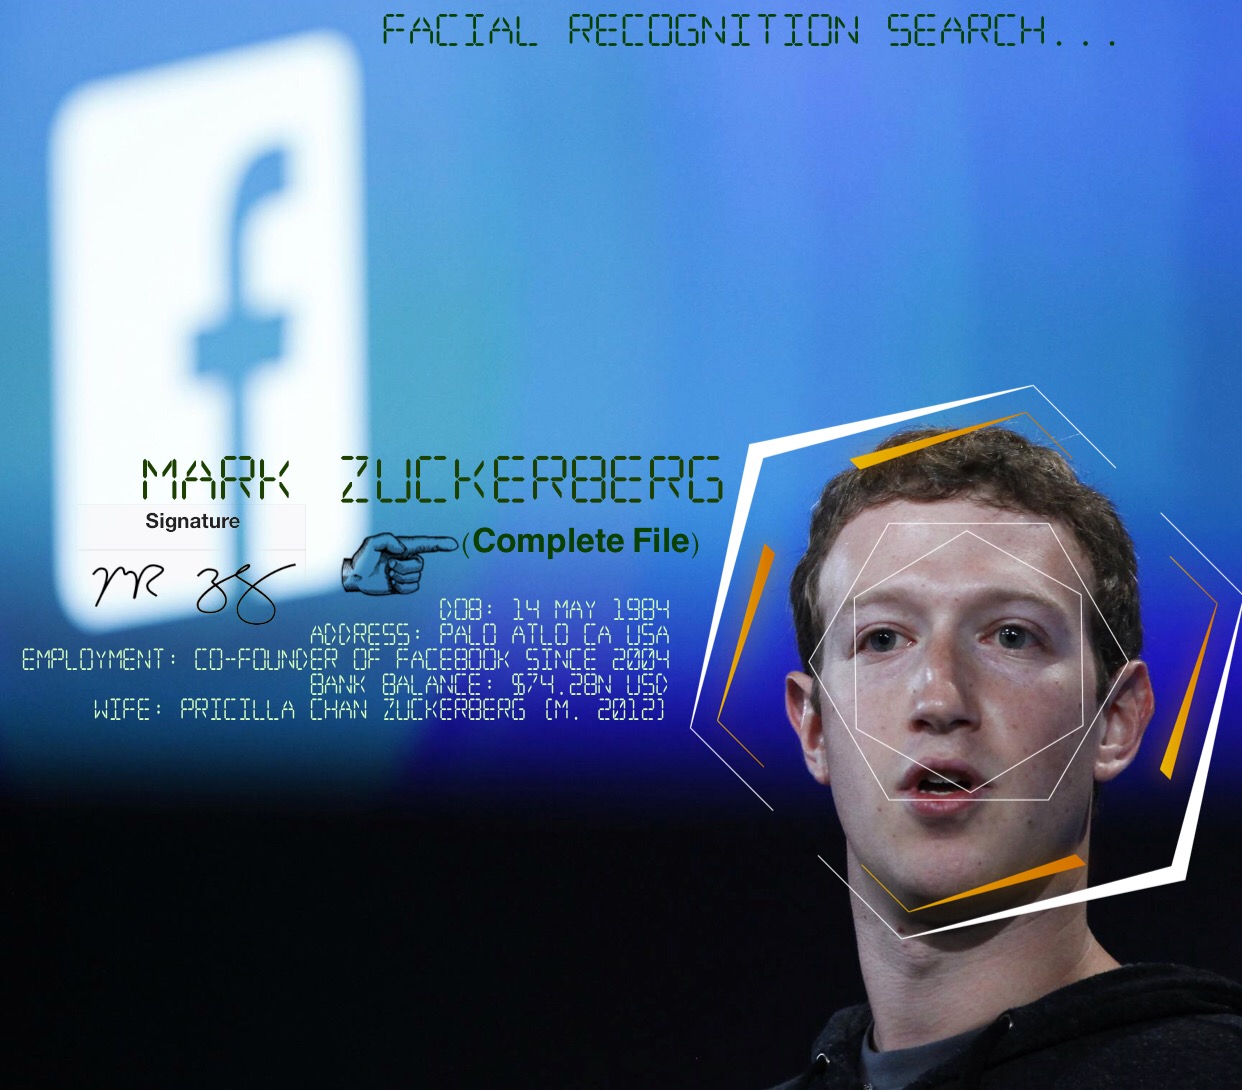 Mark Zuckerberg | Al Sahawat Times | IPMG Technologies | Facial Recognition Search 